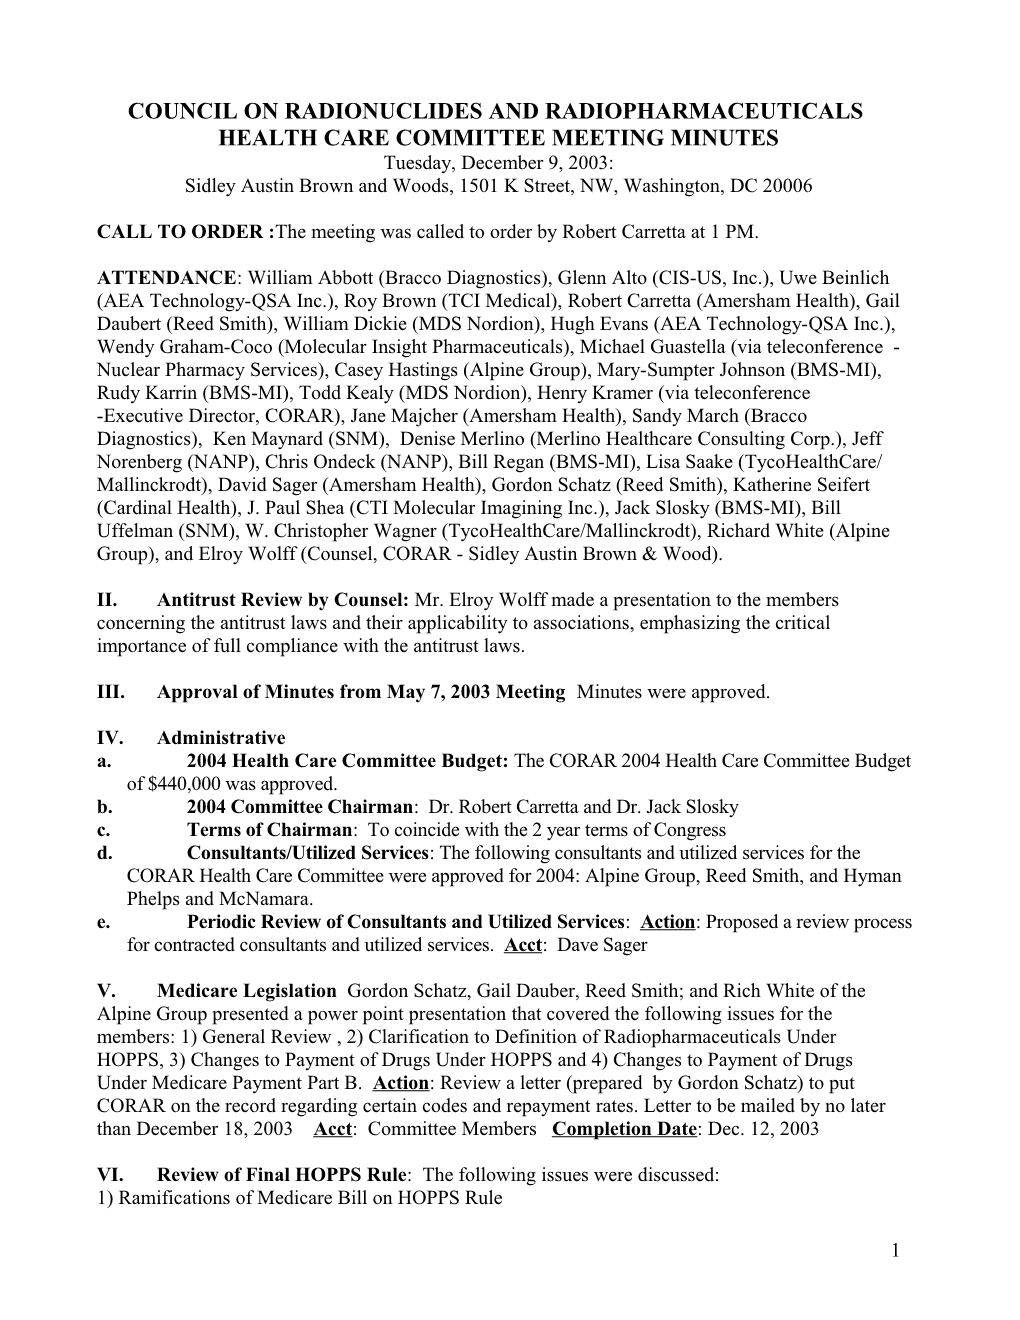 CORAR Health Care Committee Agenda 5-7-03